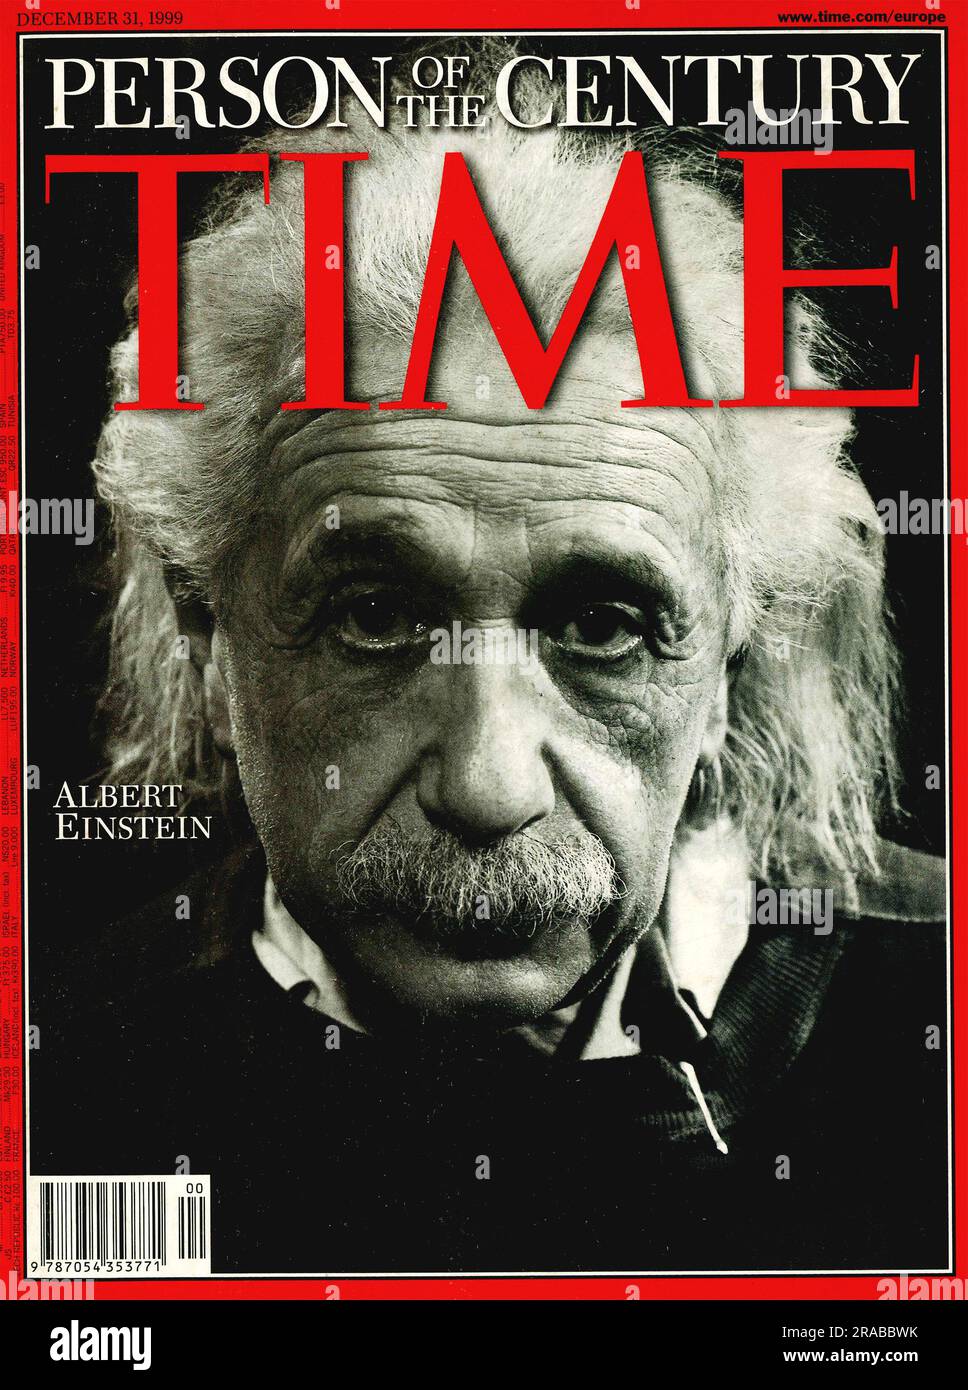 TIME magazine cover Albert Einstein - Person of the Century - Dec. 31, 1999 Stock Photo